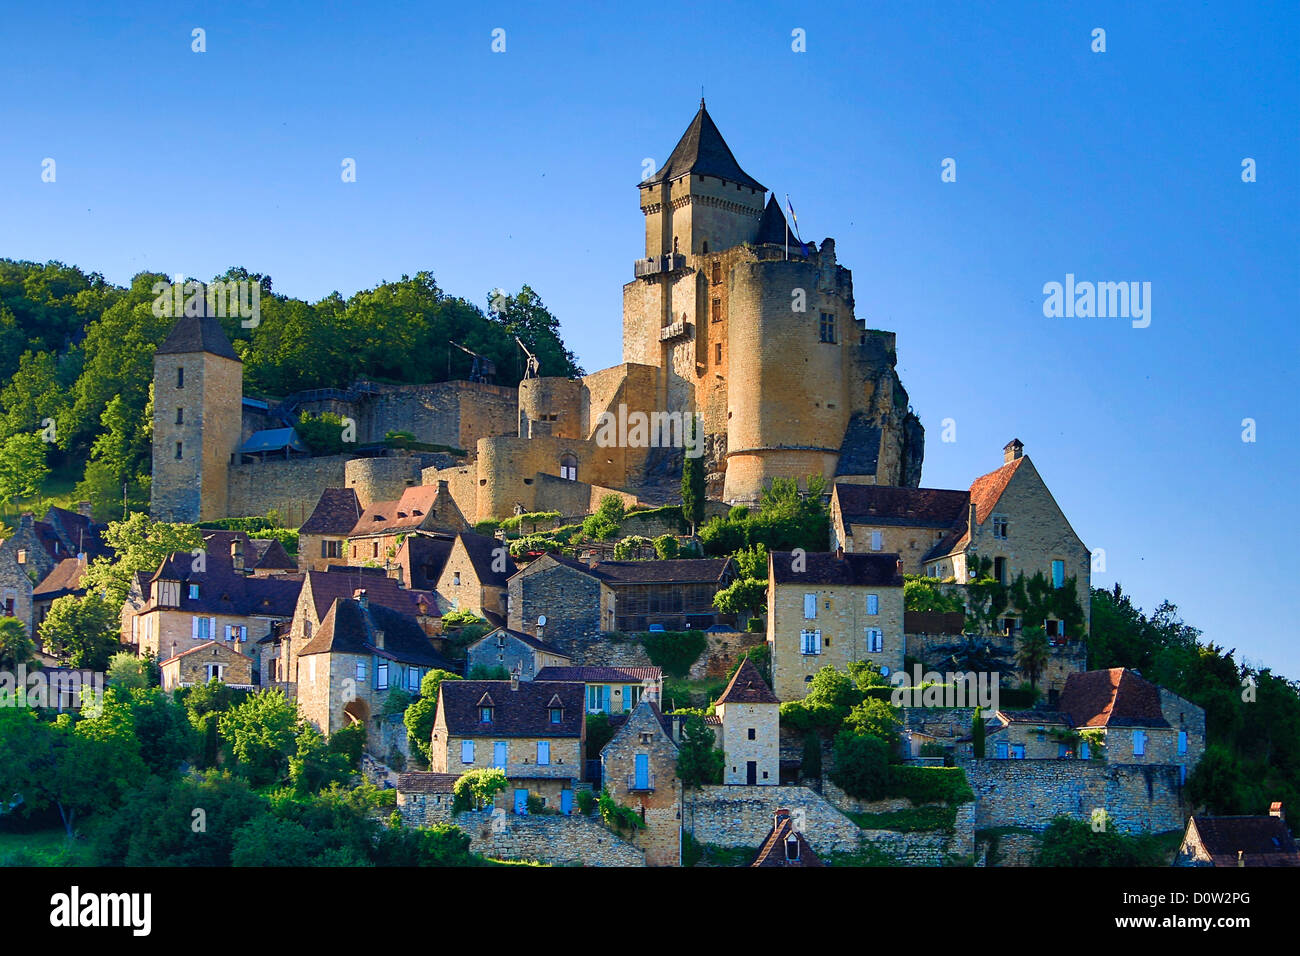 France, Europe, travel, Dordogne, Castelnaud, Milandes, Castle, architecture, medieval, skyline, steep, rocks, tower, traditiona Stock Photo